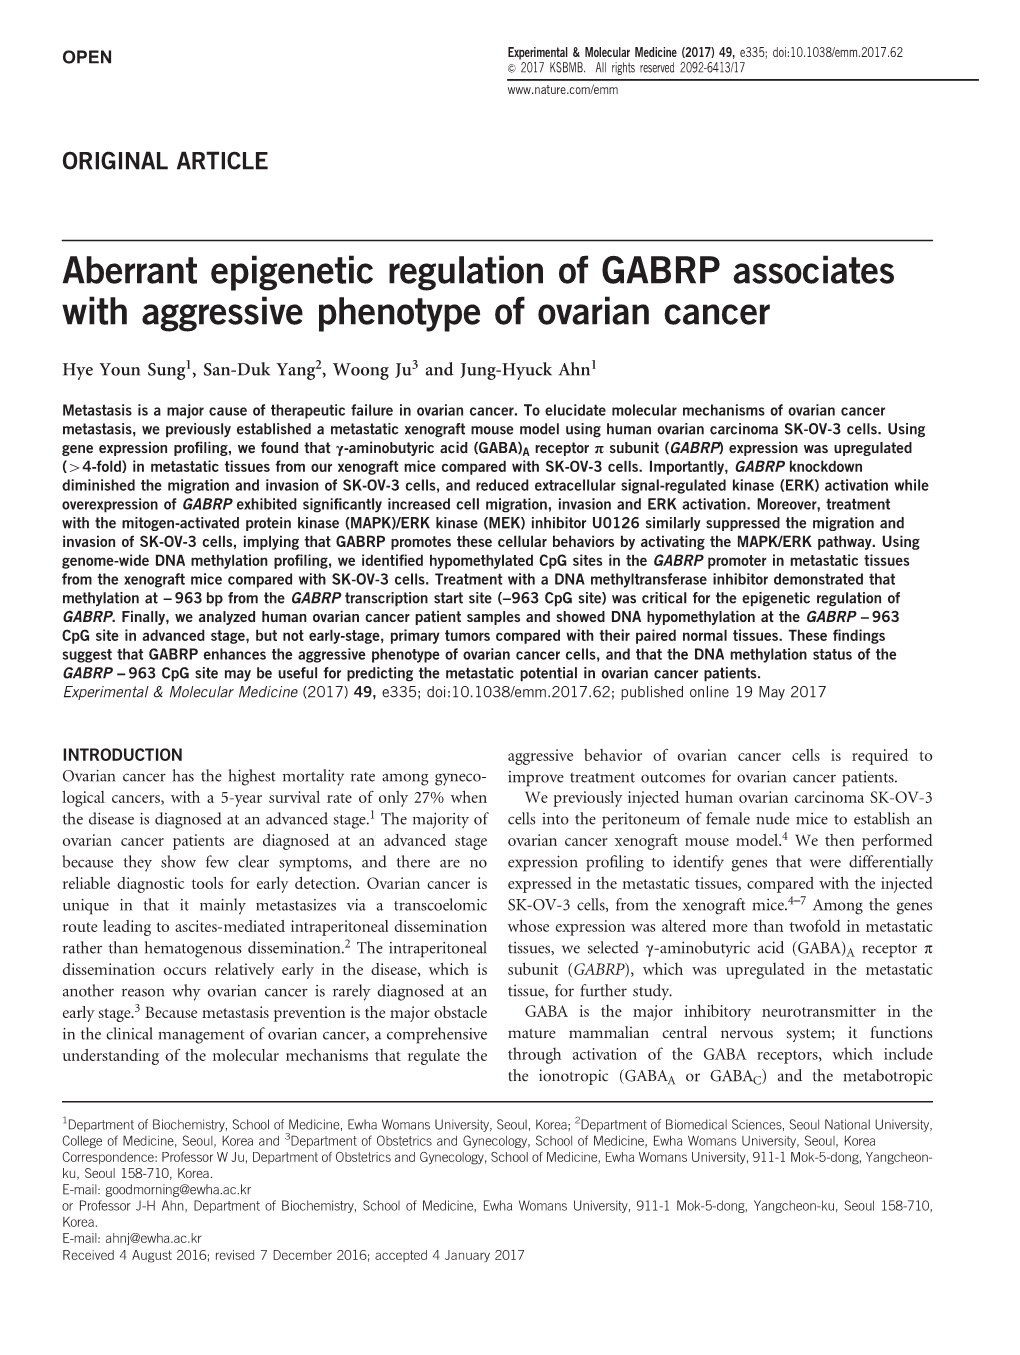 Aberrant Epigenetic Regulation of GABRP Associates with Aggressive Phenotype of Ovarian Cancer